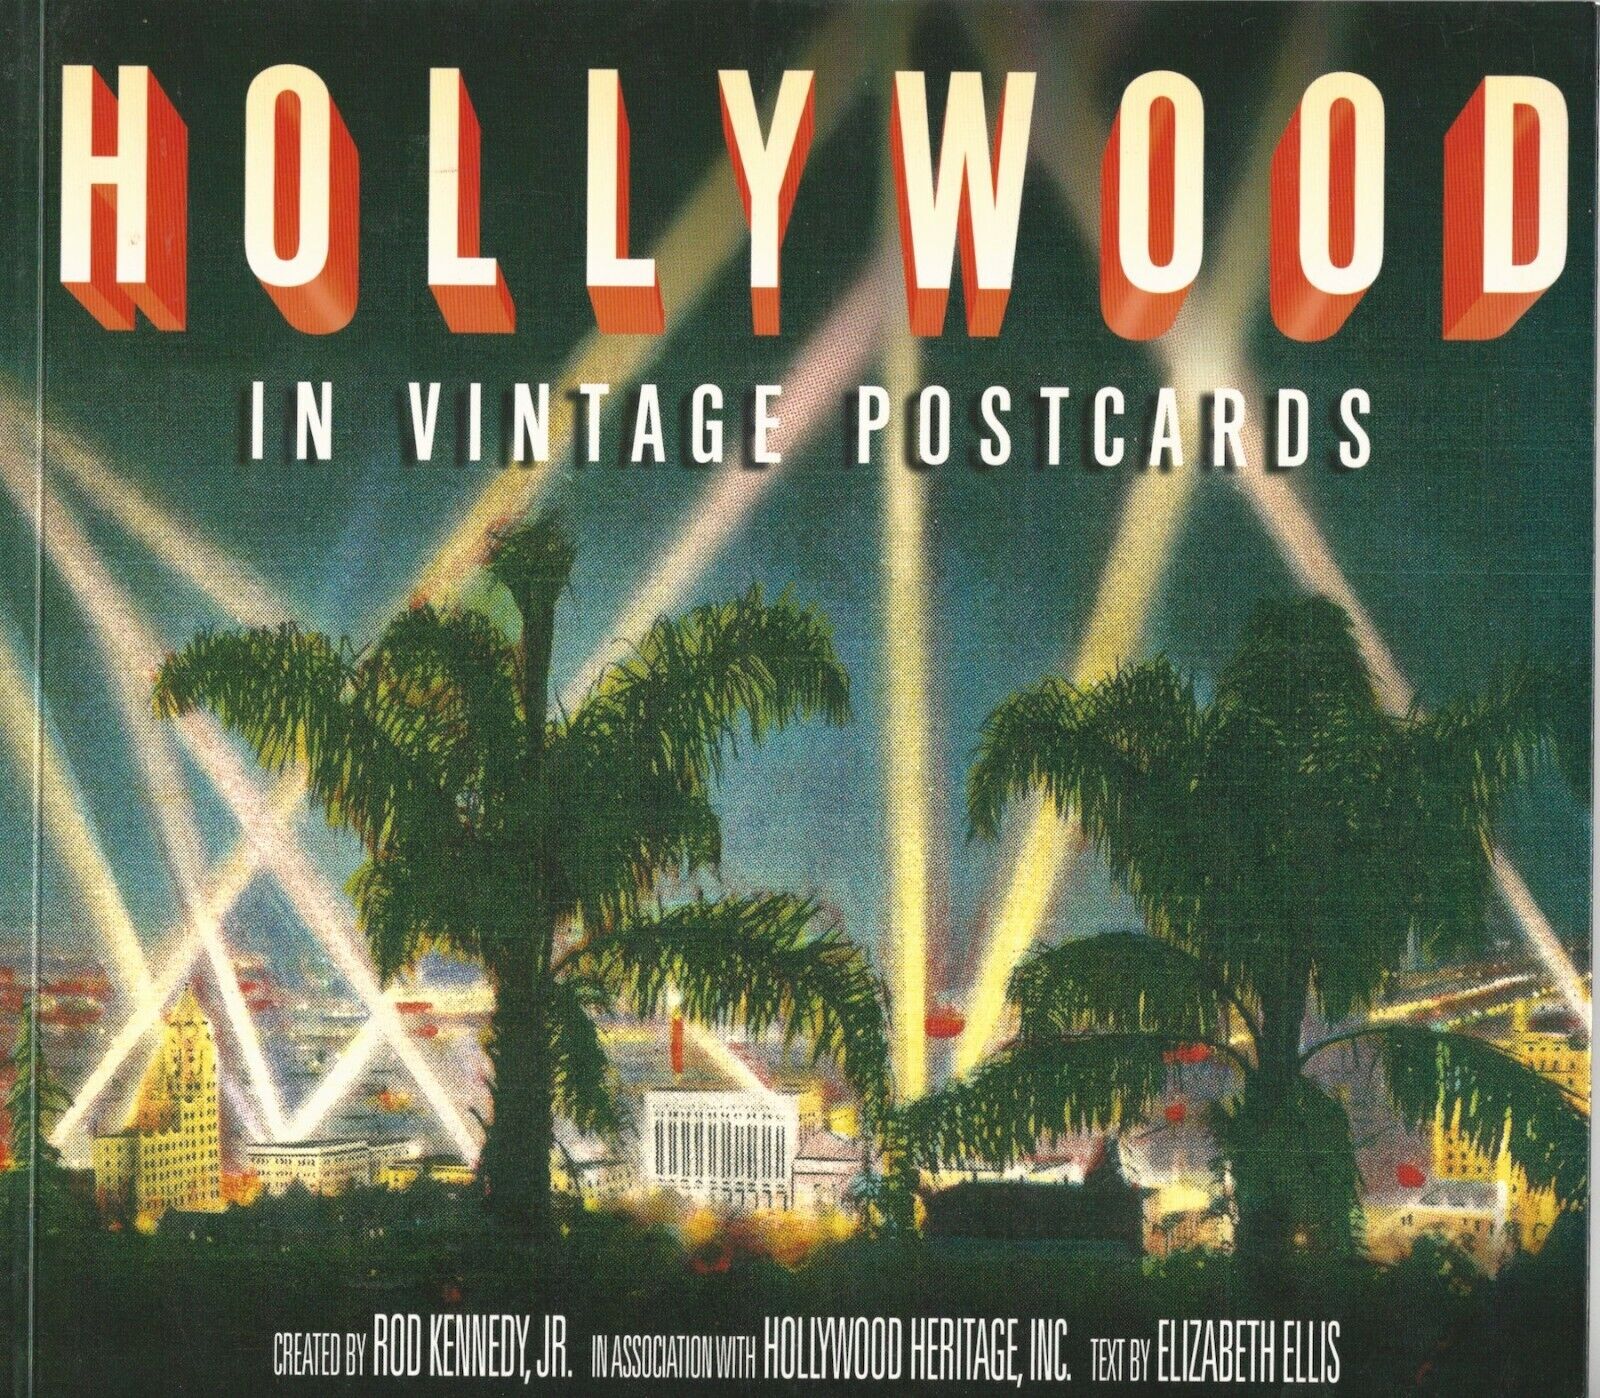 Hollywood in Vintage Postcards, by Rod Kennedy and Elizabeth Ellis